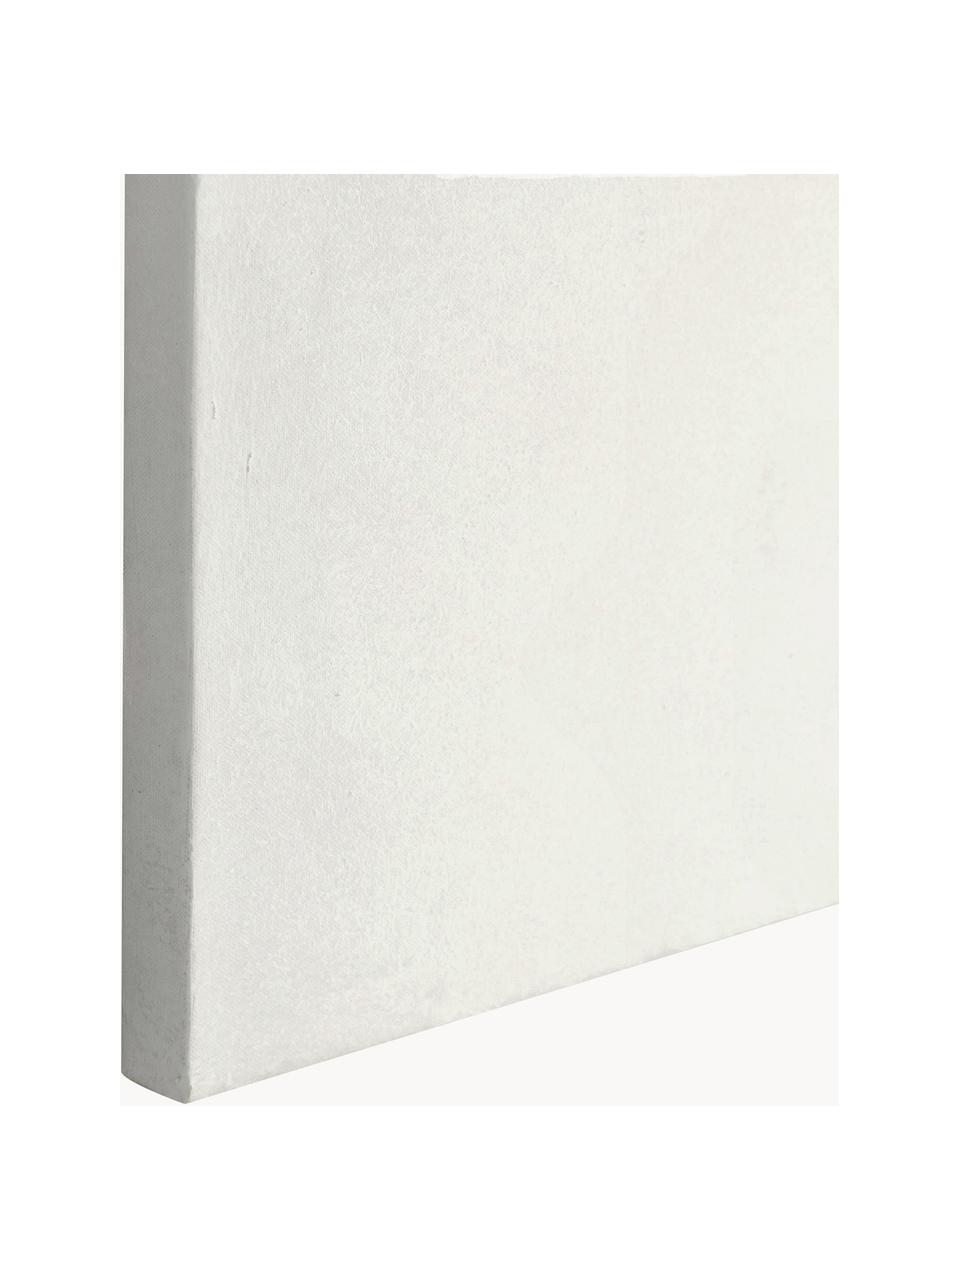 Leinwandbild Texture, Bild: Flachsfasern, Weiß, B 90 x H 120 cm